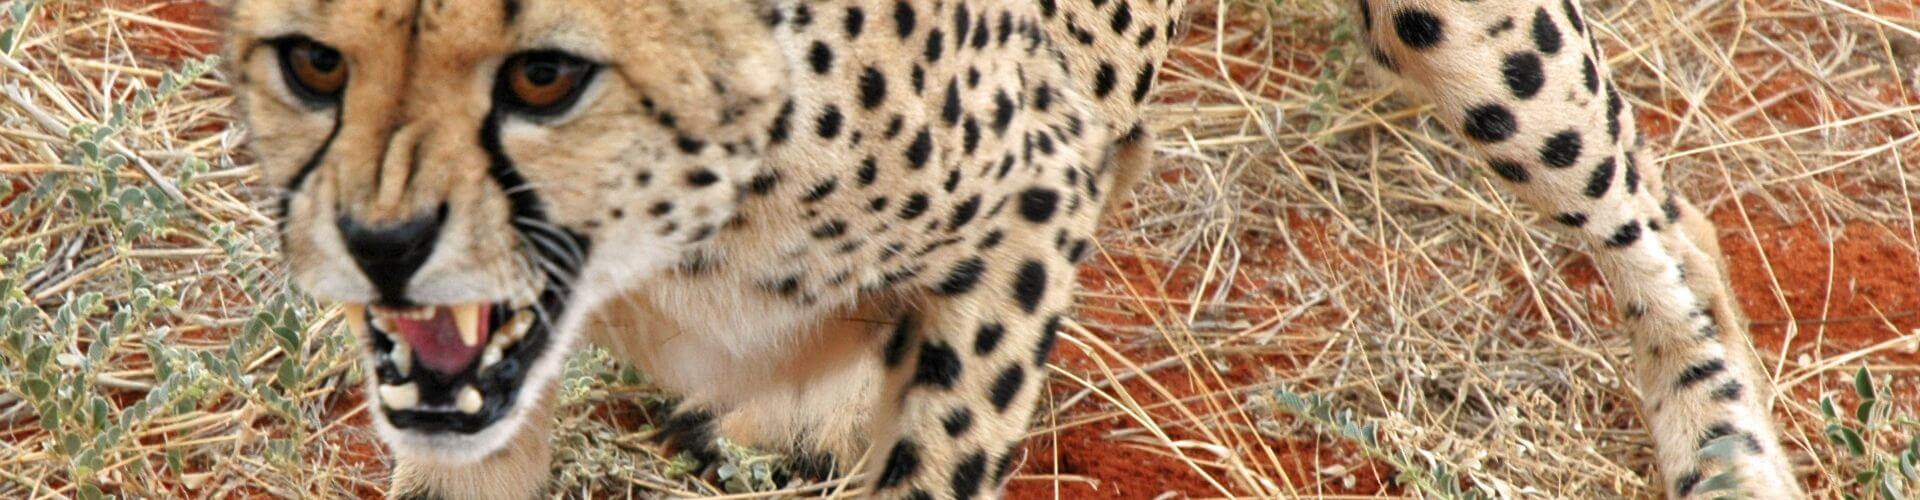 Gepard in der Kalahari 